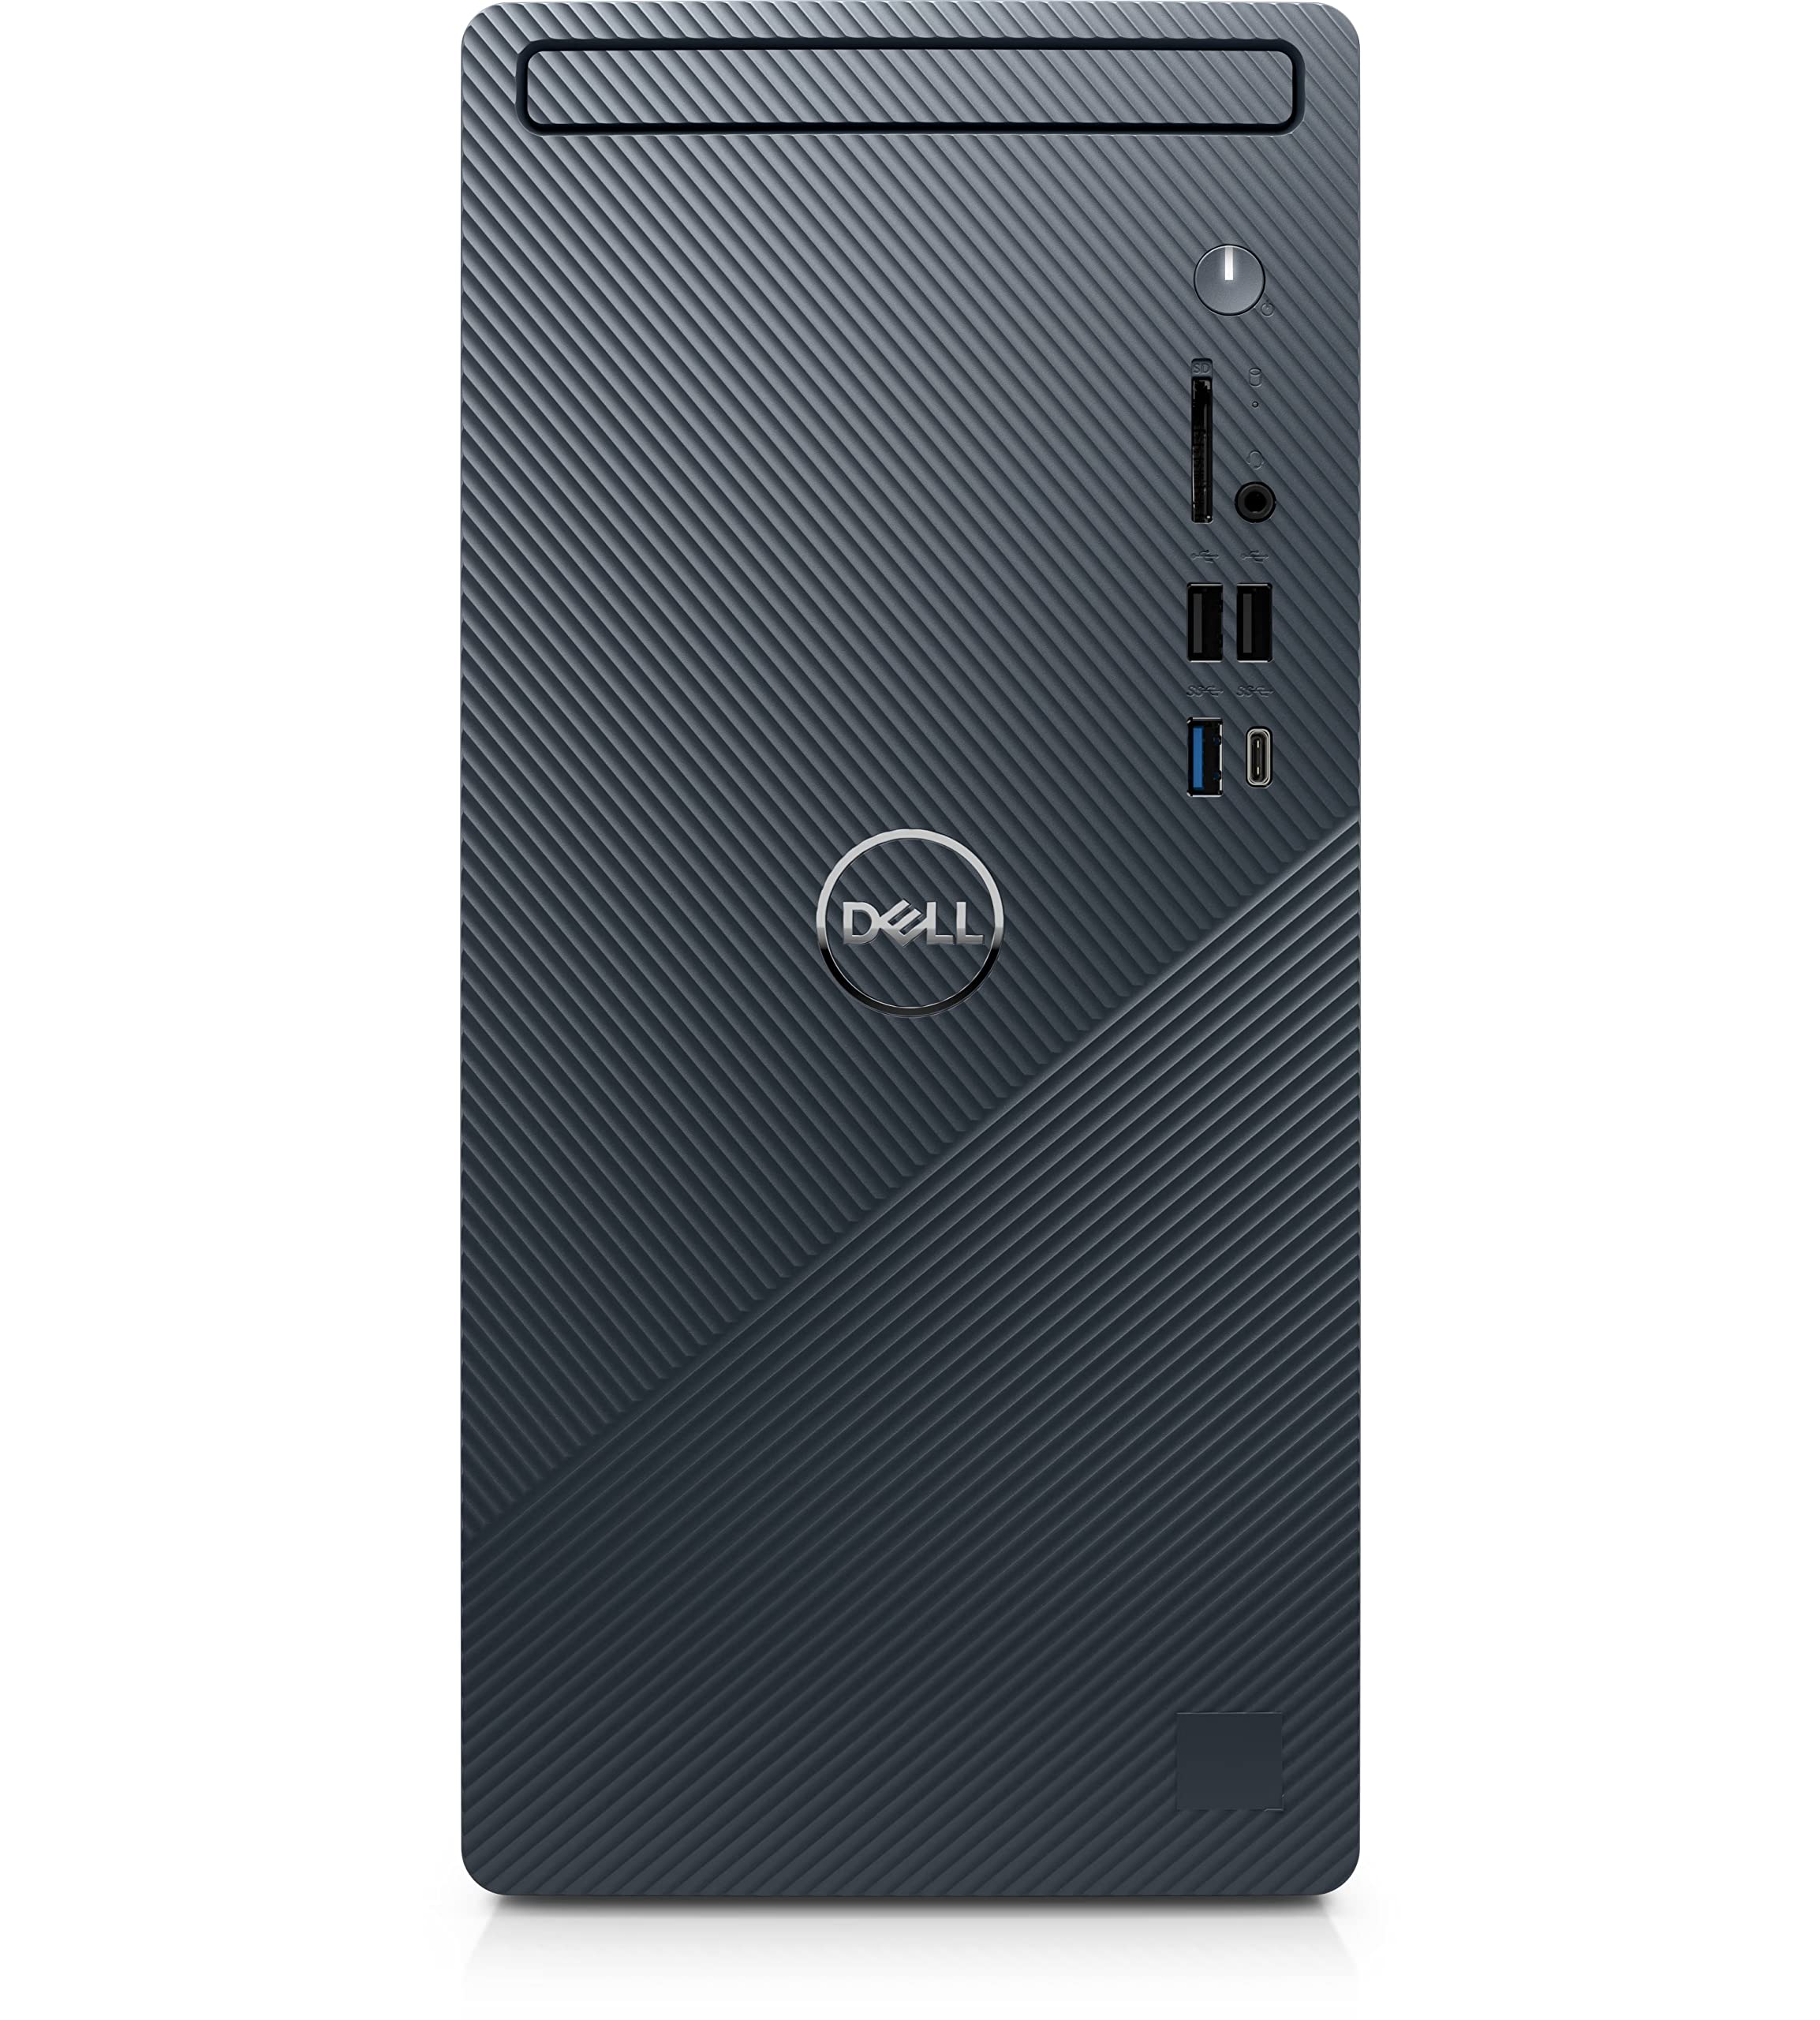 Dell Inspiron 3020 Tower Desktop Computer - 13th Gen Intel Core i5-13400 10-Core up to 4.60 GHz Processor, 64GB DDR4 RAM, 512GB NVMe SSD, Intel UHD Graphics 730, DVD+RW, Windows 11 Home